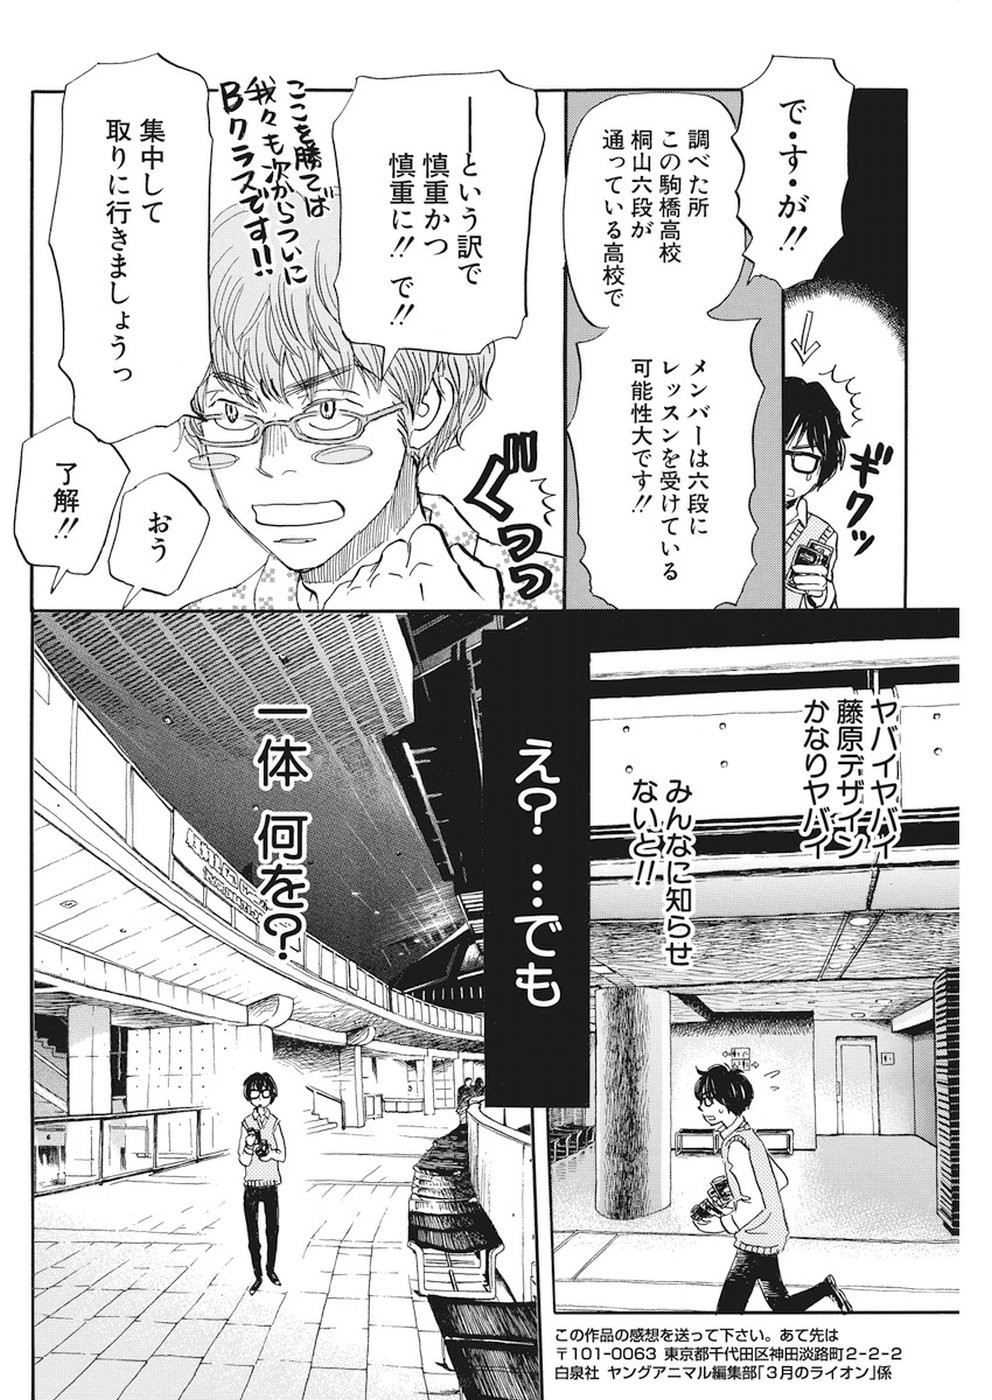 3 Gatsu no Lion - Chapter 150 - Page 8